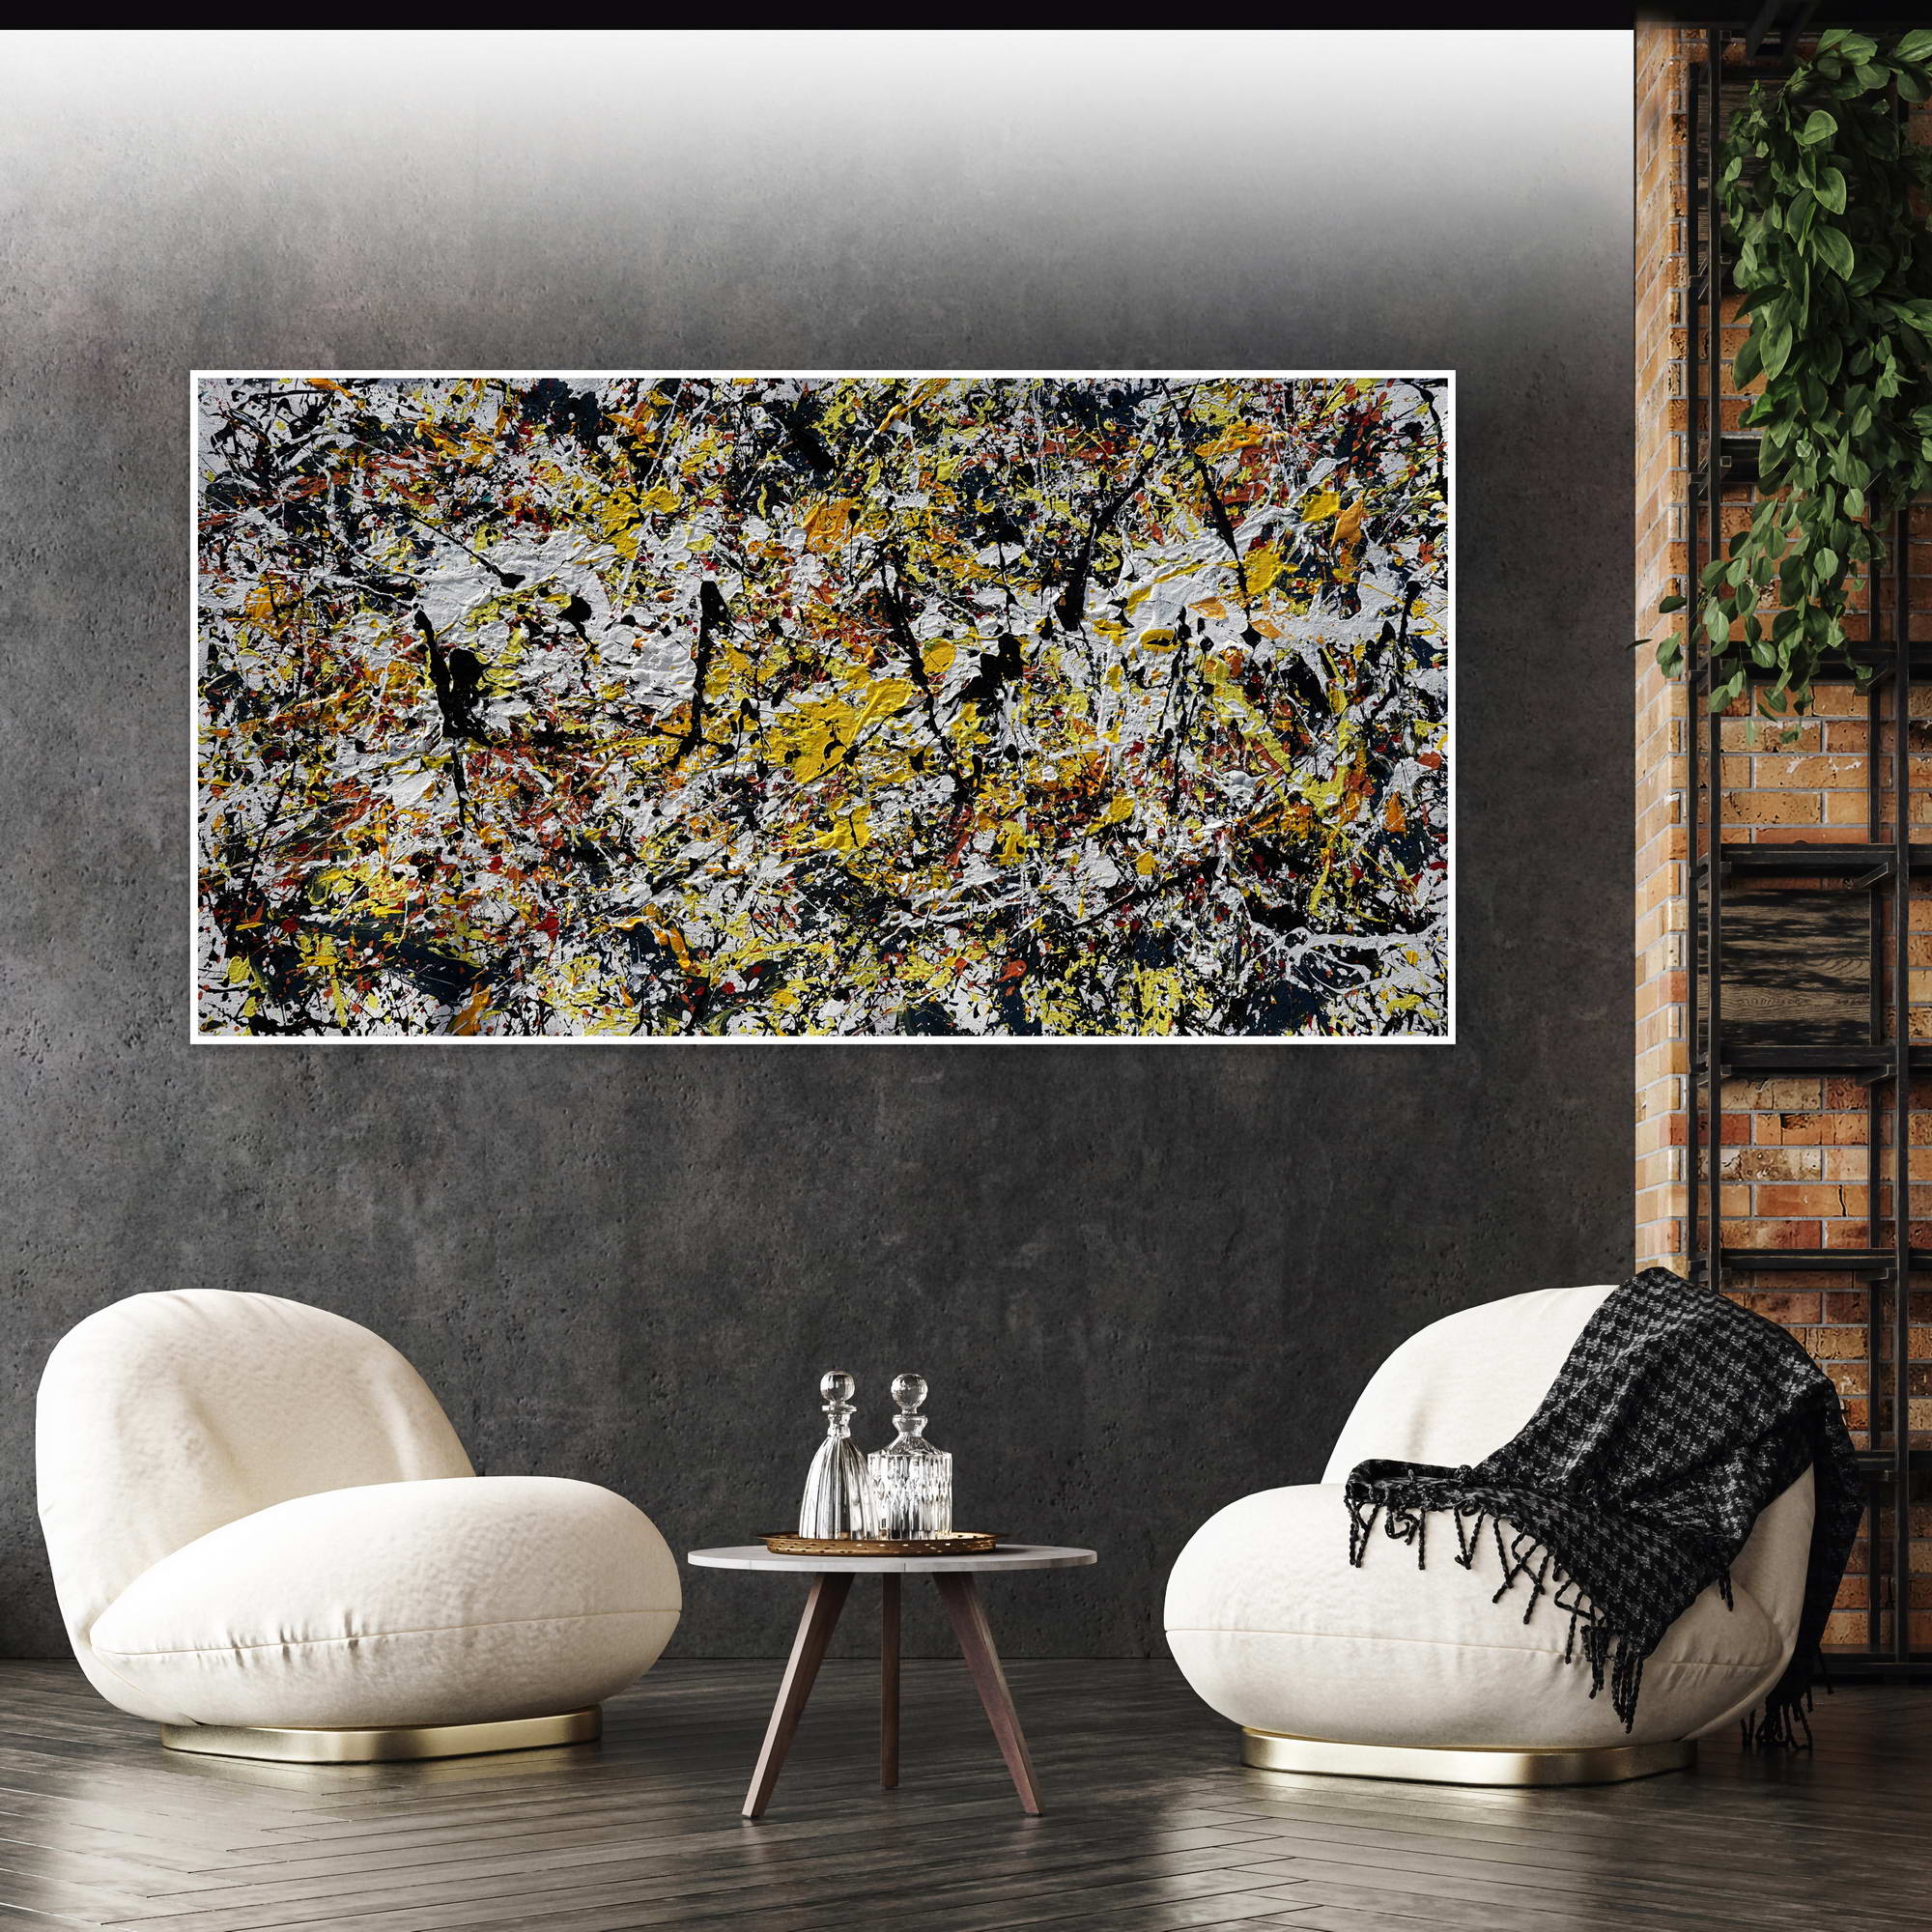 Dipinto a mano Astratto Giallo e Nero stile Pollock 75x150cm